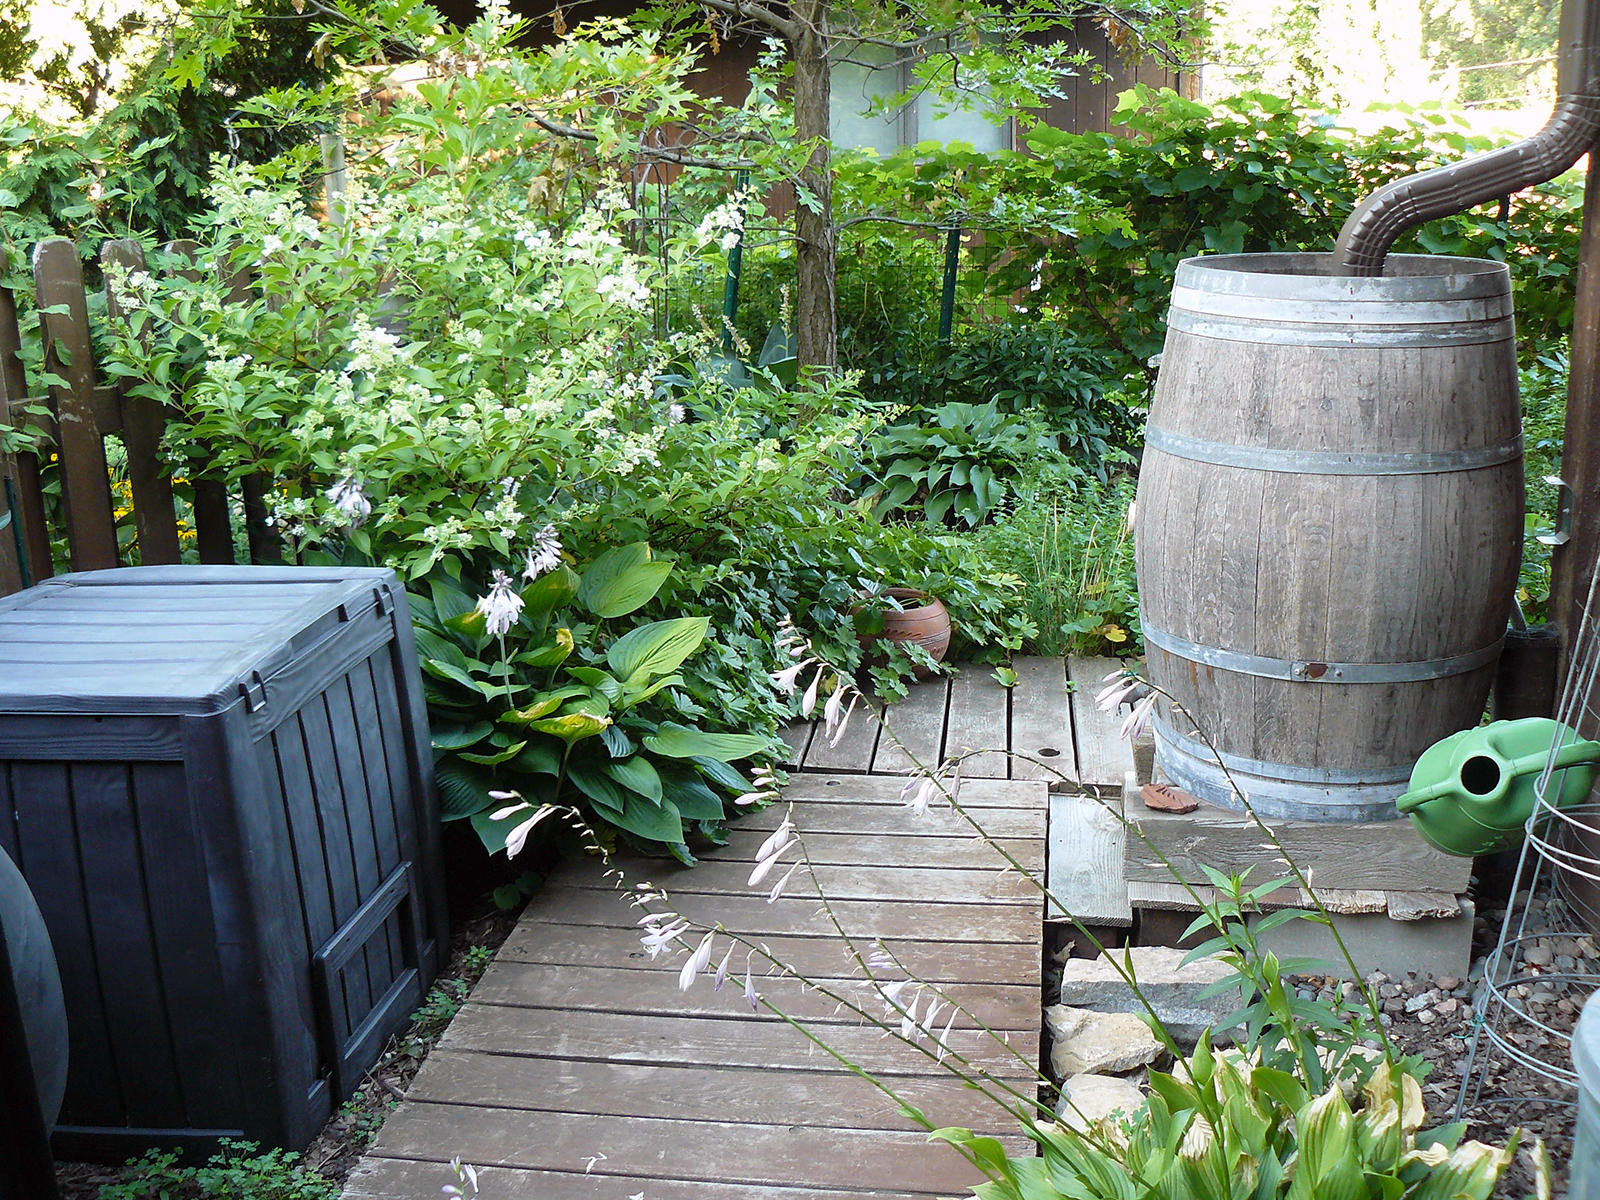 Rain Barrels In The Home Landscape, Using Rain Barrel Water For Vegetable Gardens